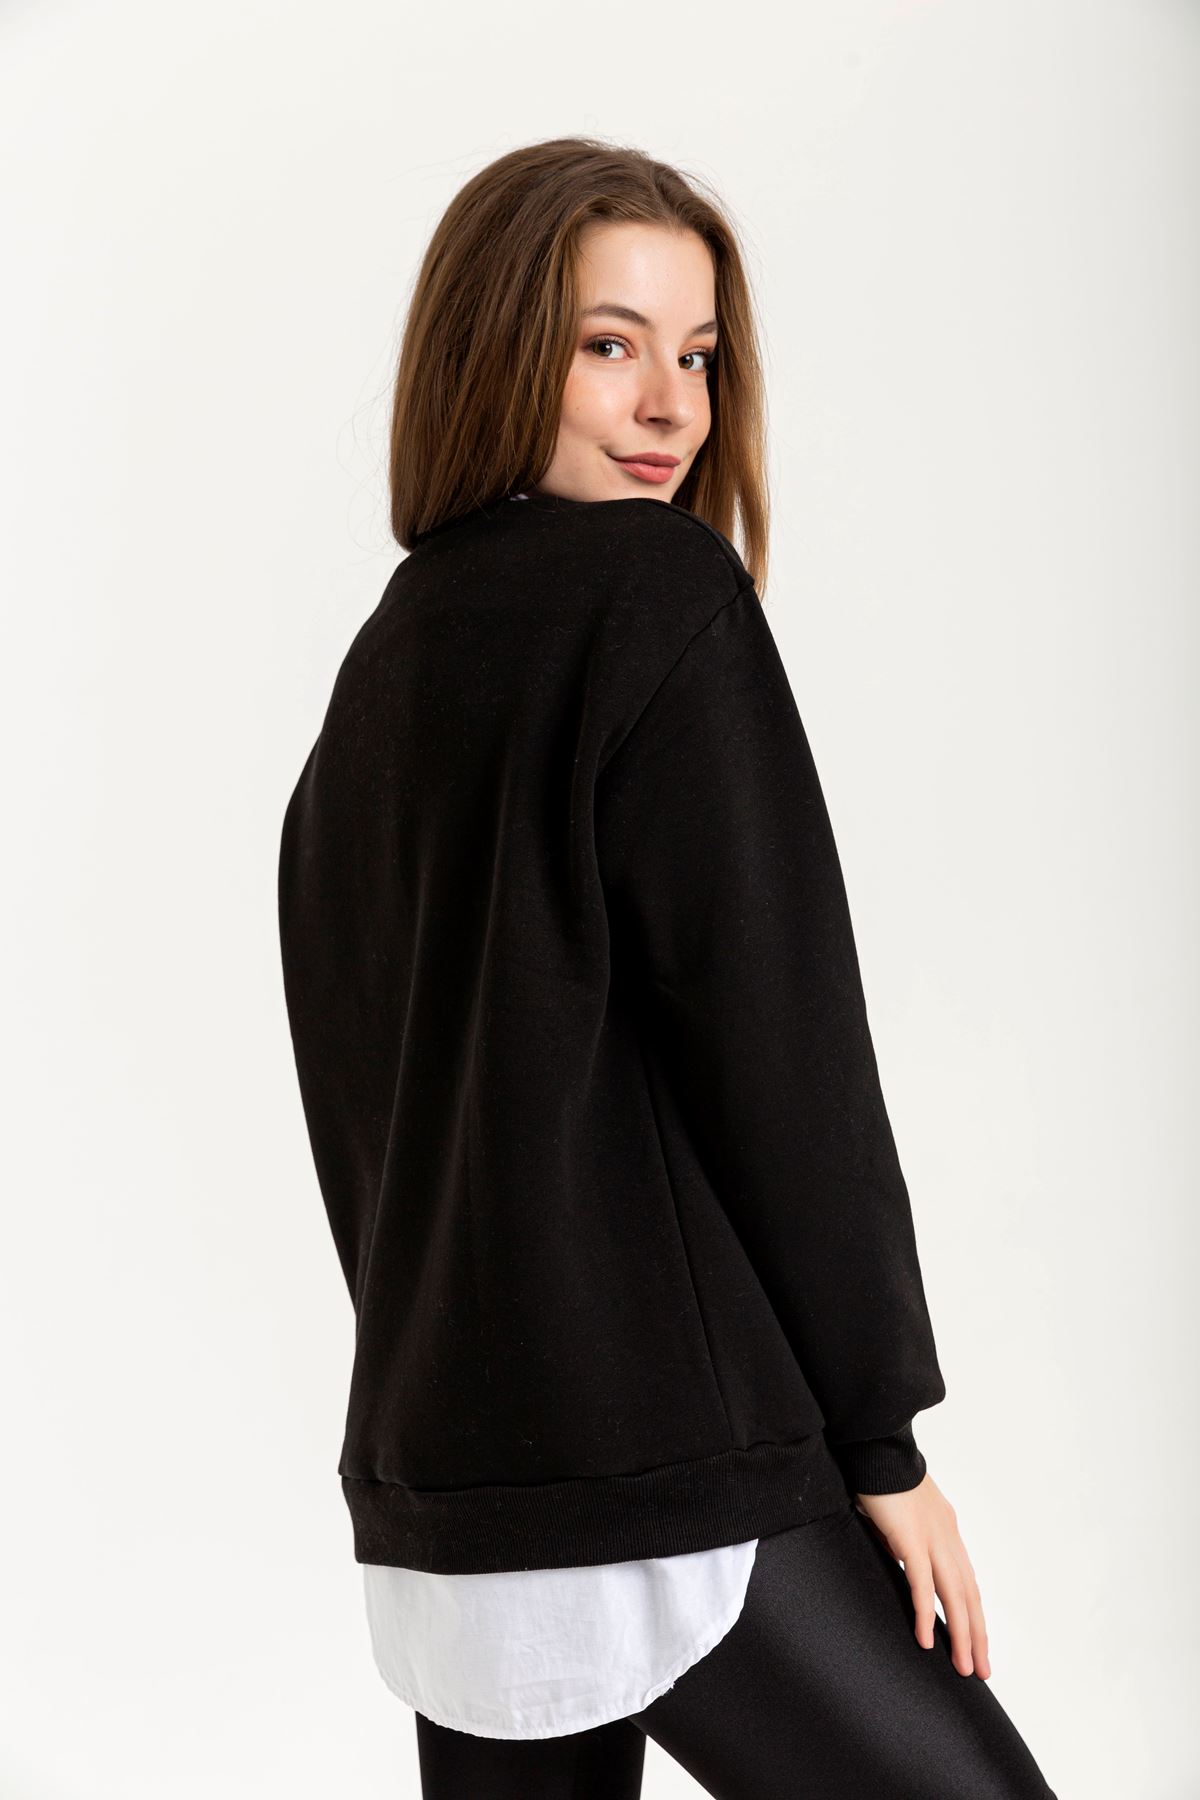 Third Knit With Wool İnside Fabric Hip Height Inscribed Women Sweatshirt - Black